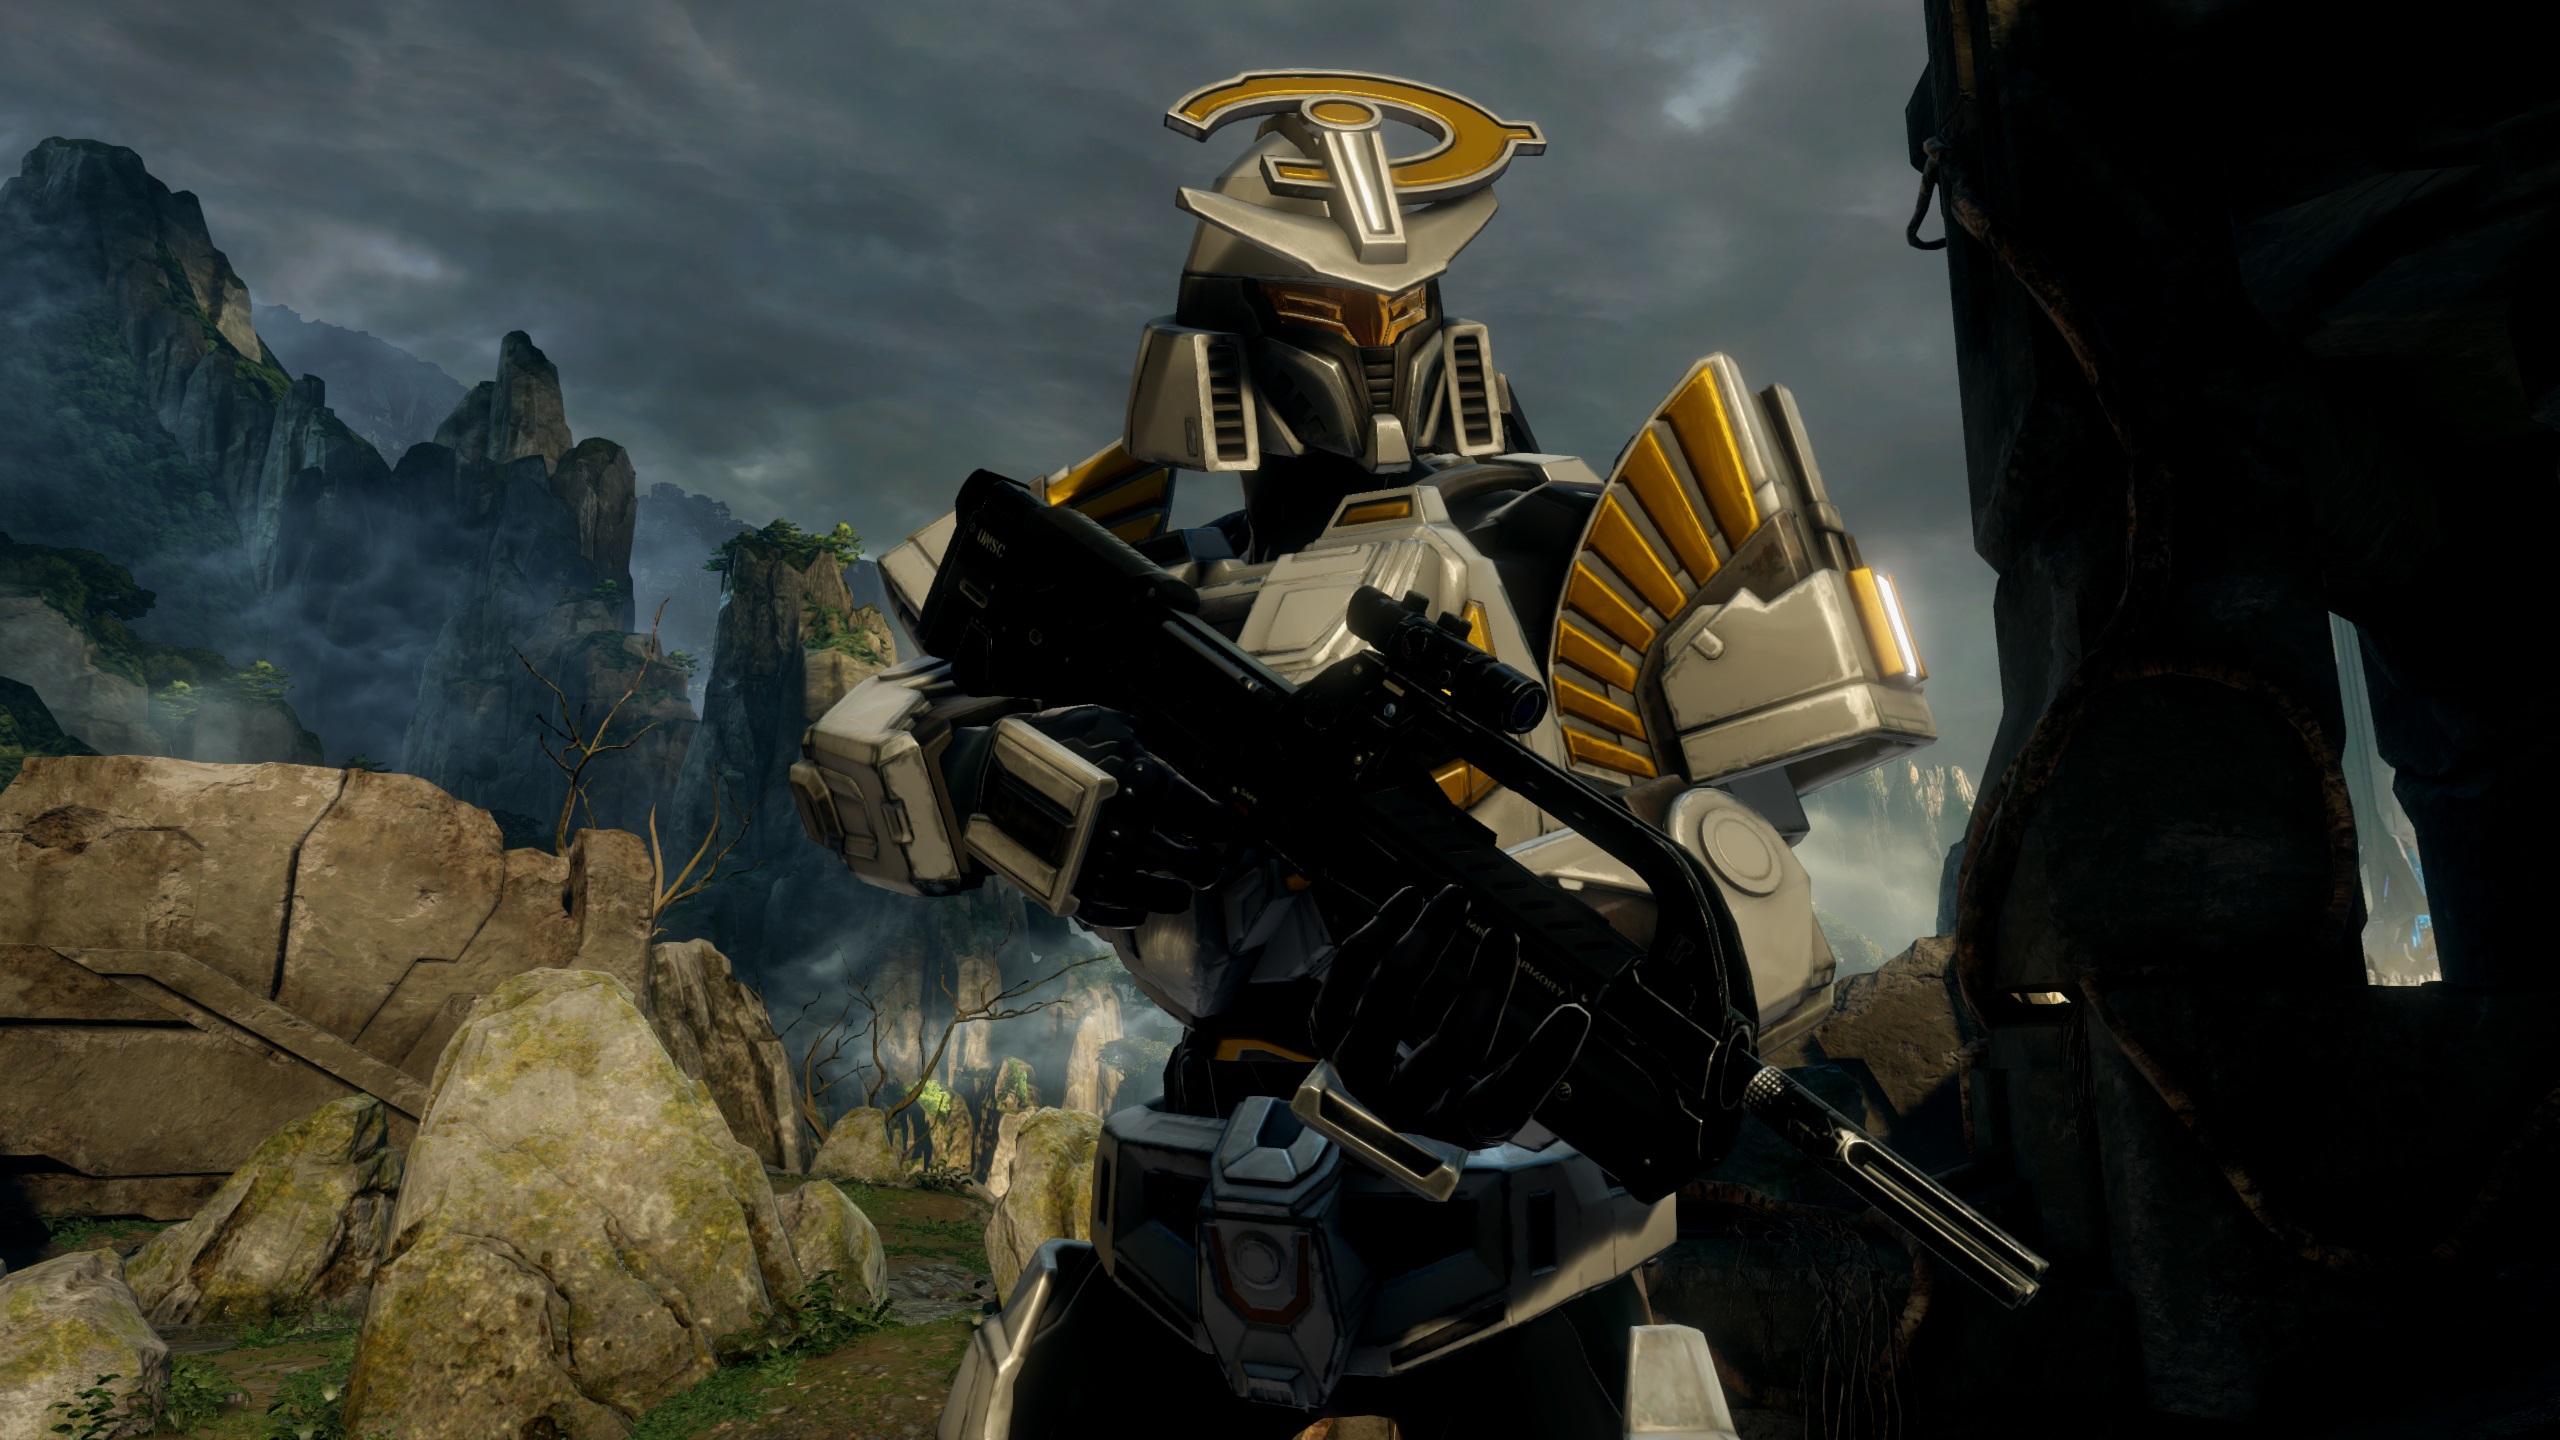 In-game screenshot of Megaframe armor